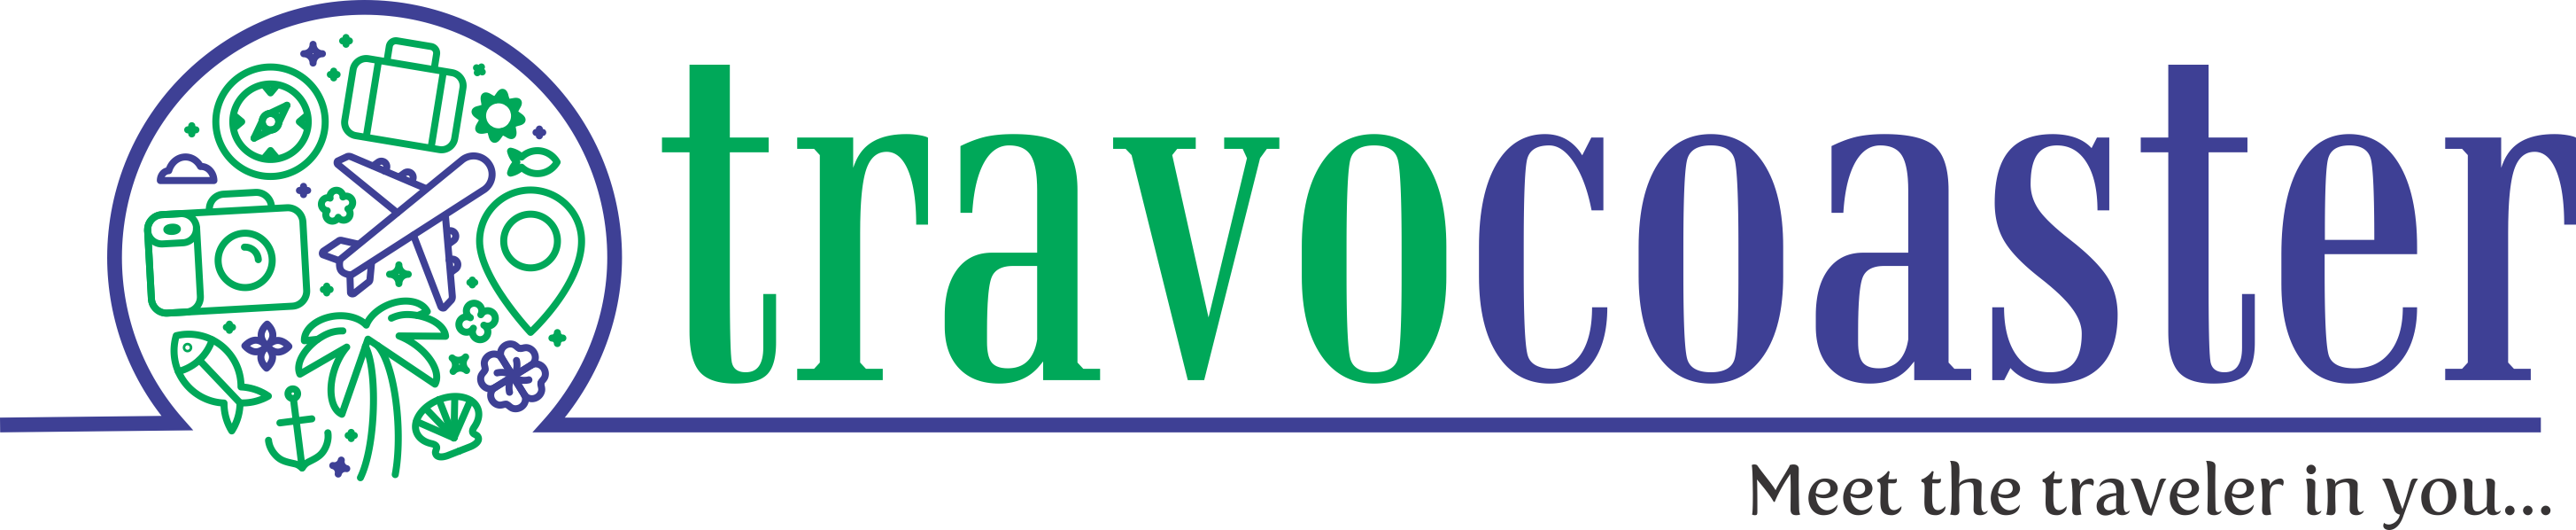 Travocoaster Logo